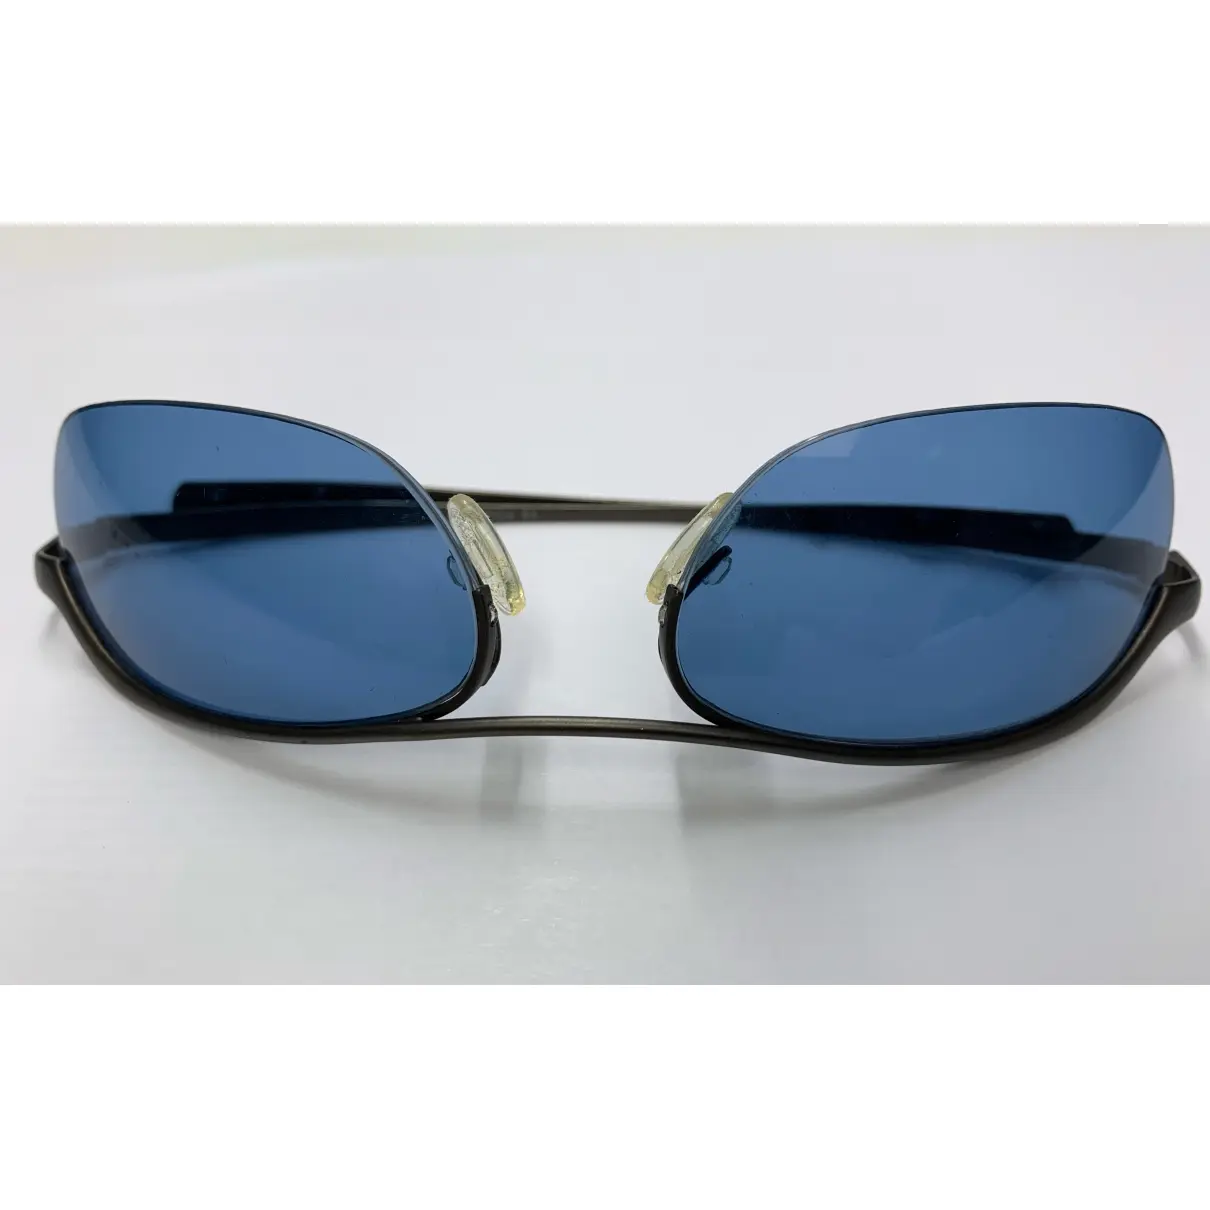 Sunglasses Paul Smith - Vintage